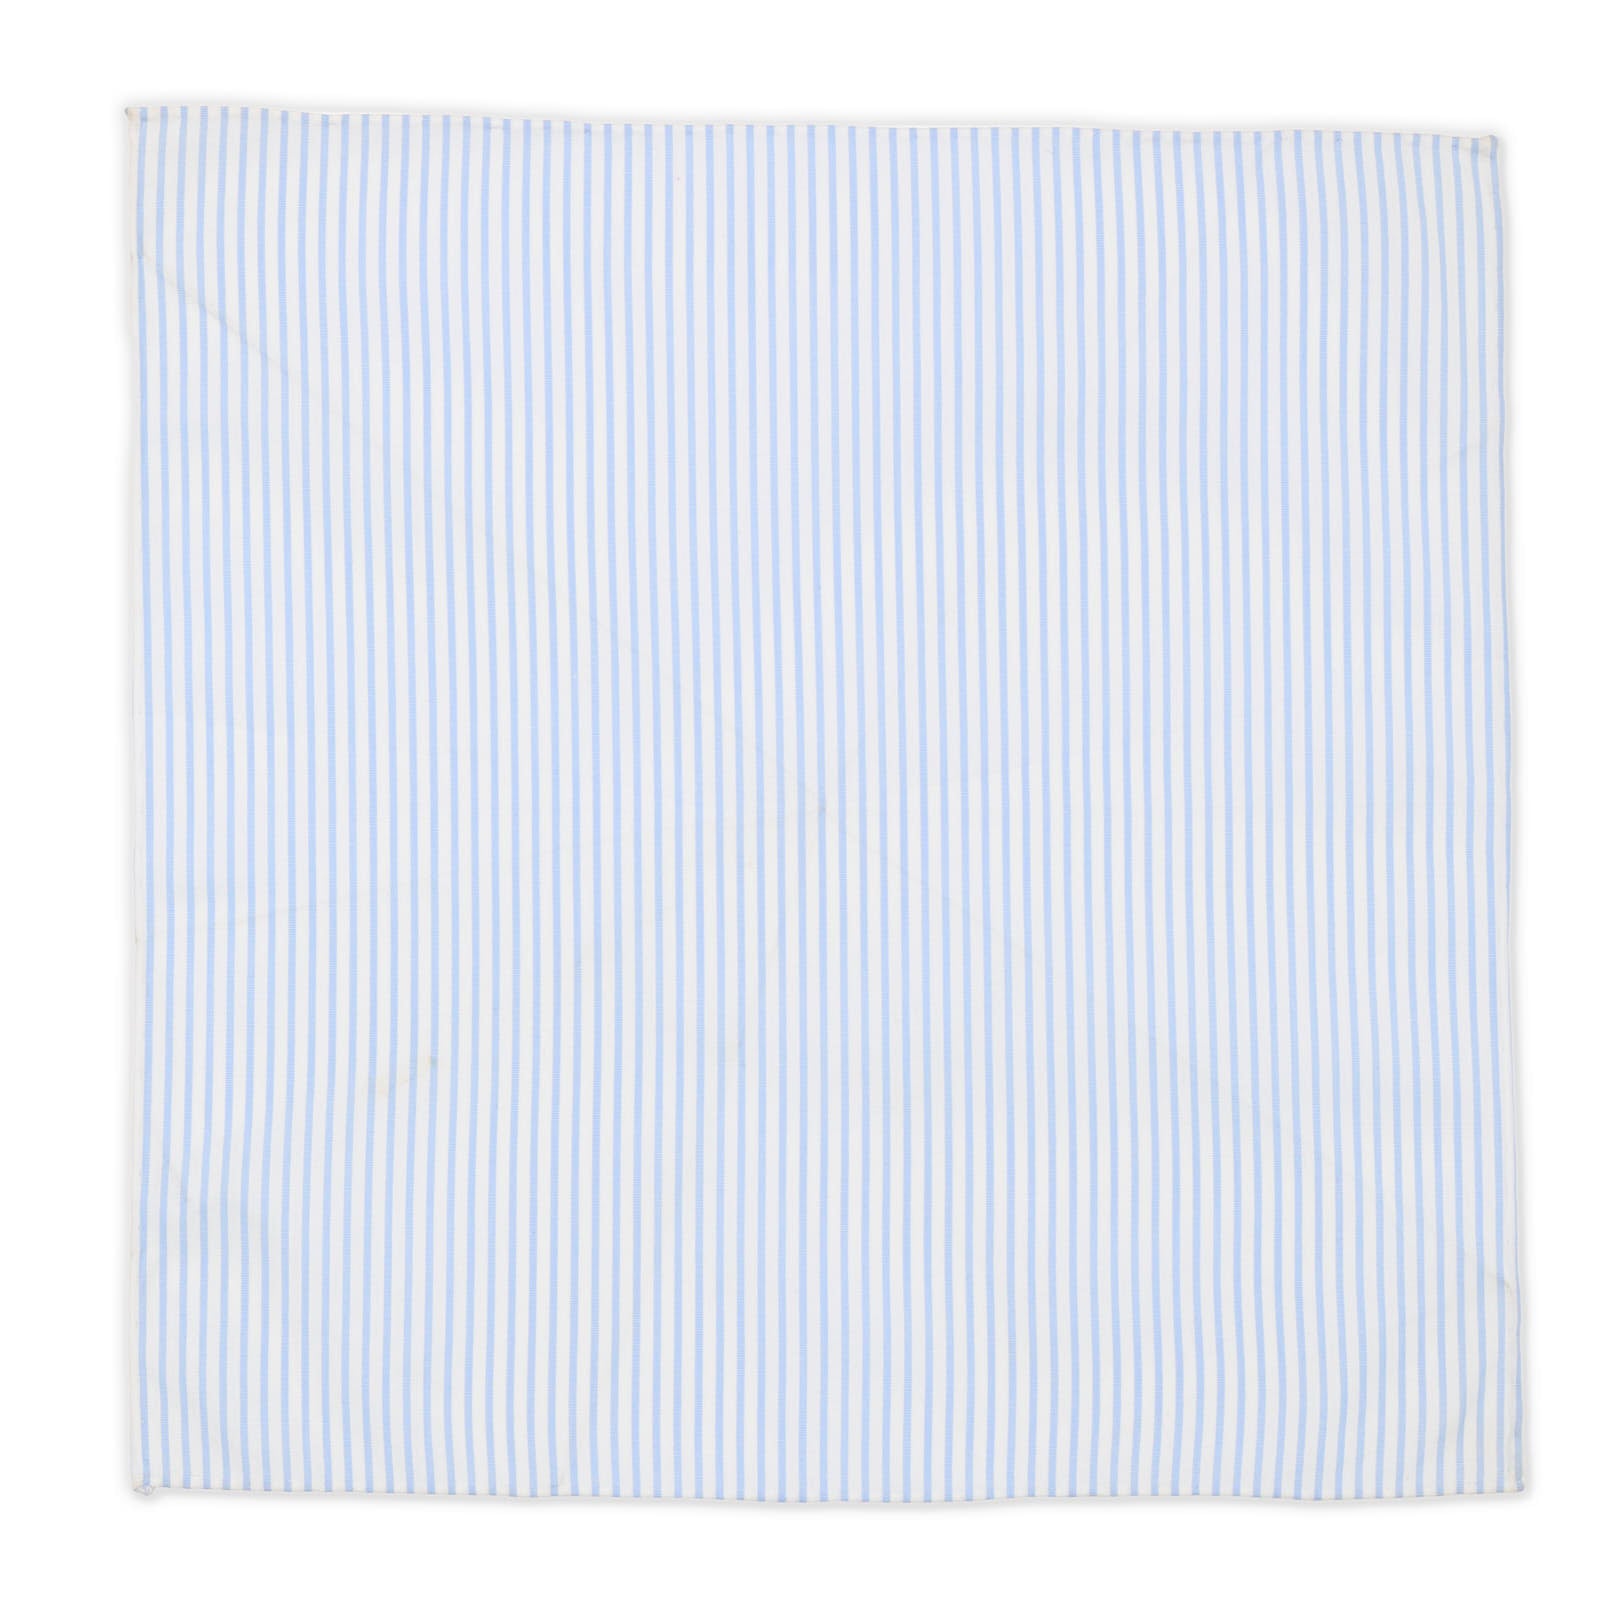 VANNUCCI Milano Handmade Blue-White Striped Cotton Pocket Square NEW 29cm x 29cm